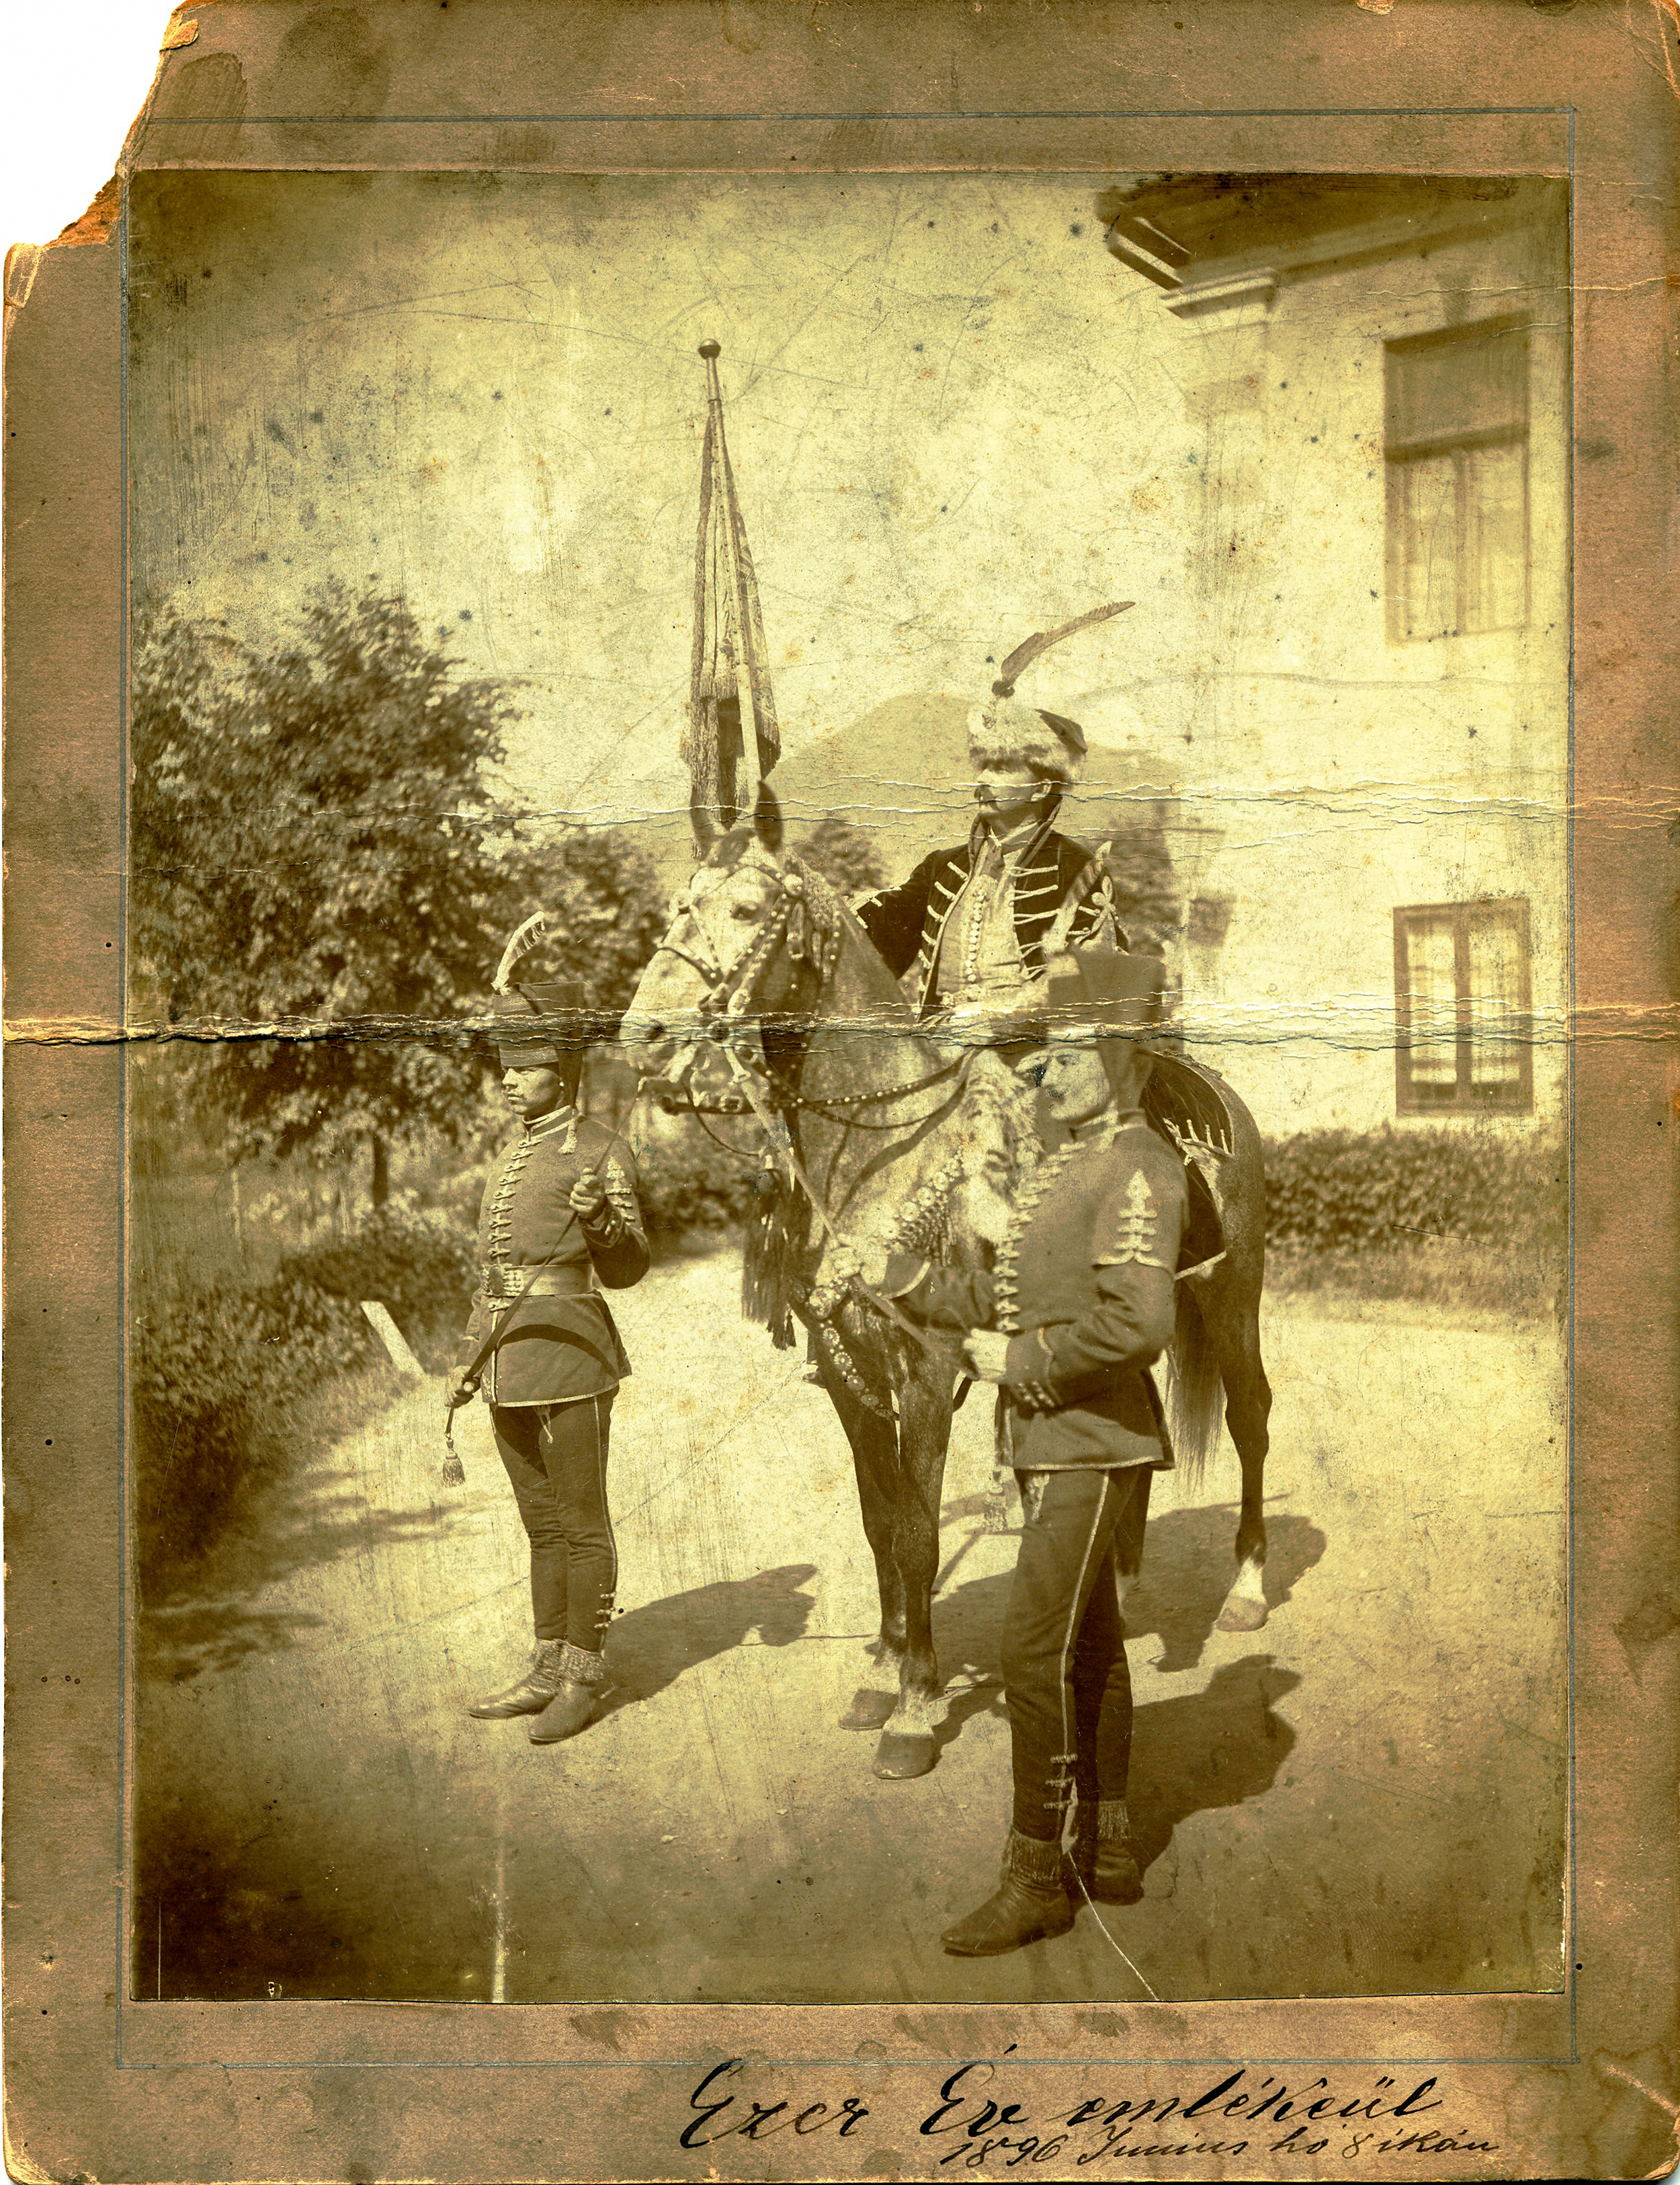   JU's grandfather (right foreground) Honor Guard - Royal Palace - Budapest, Hungary, 1898  